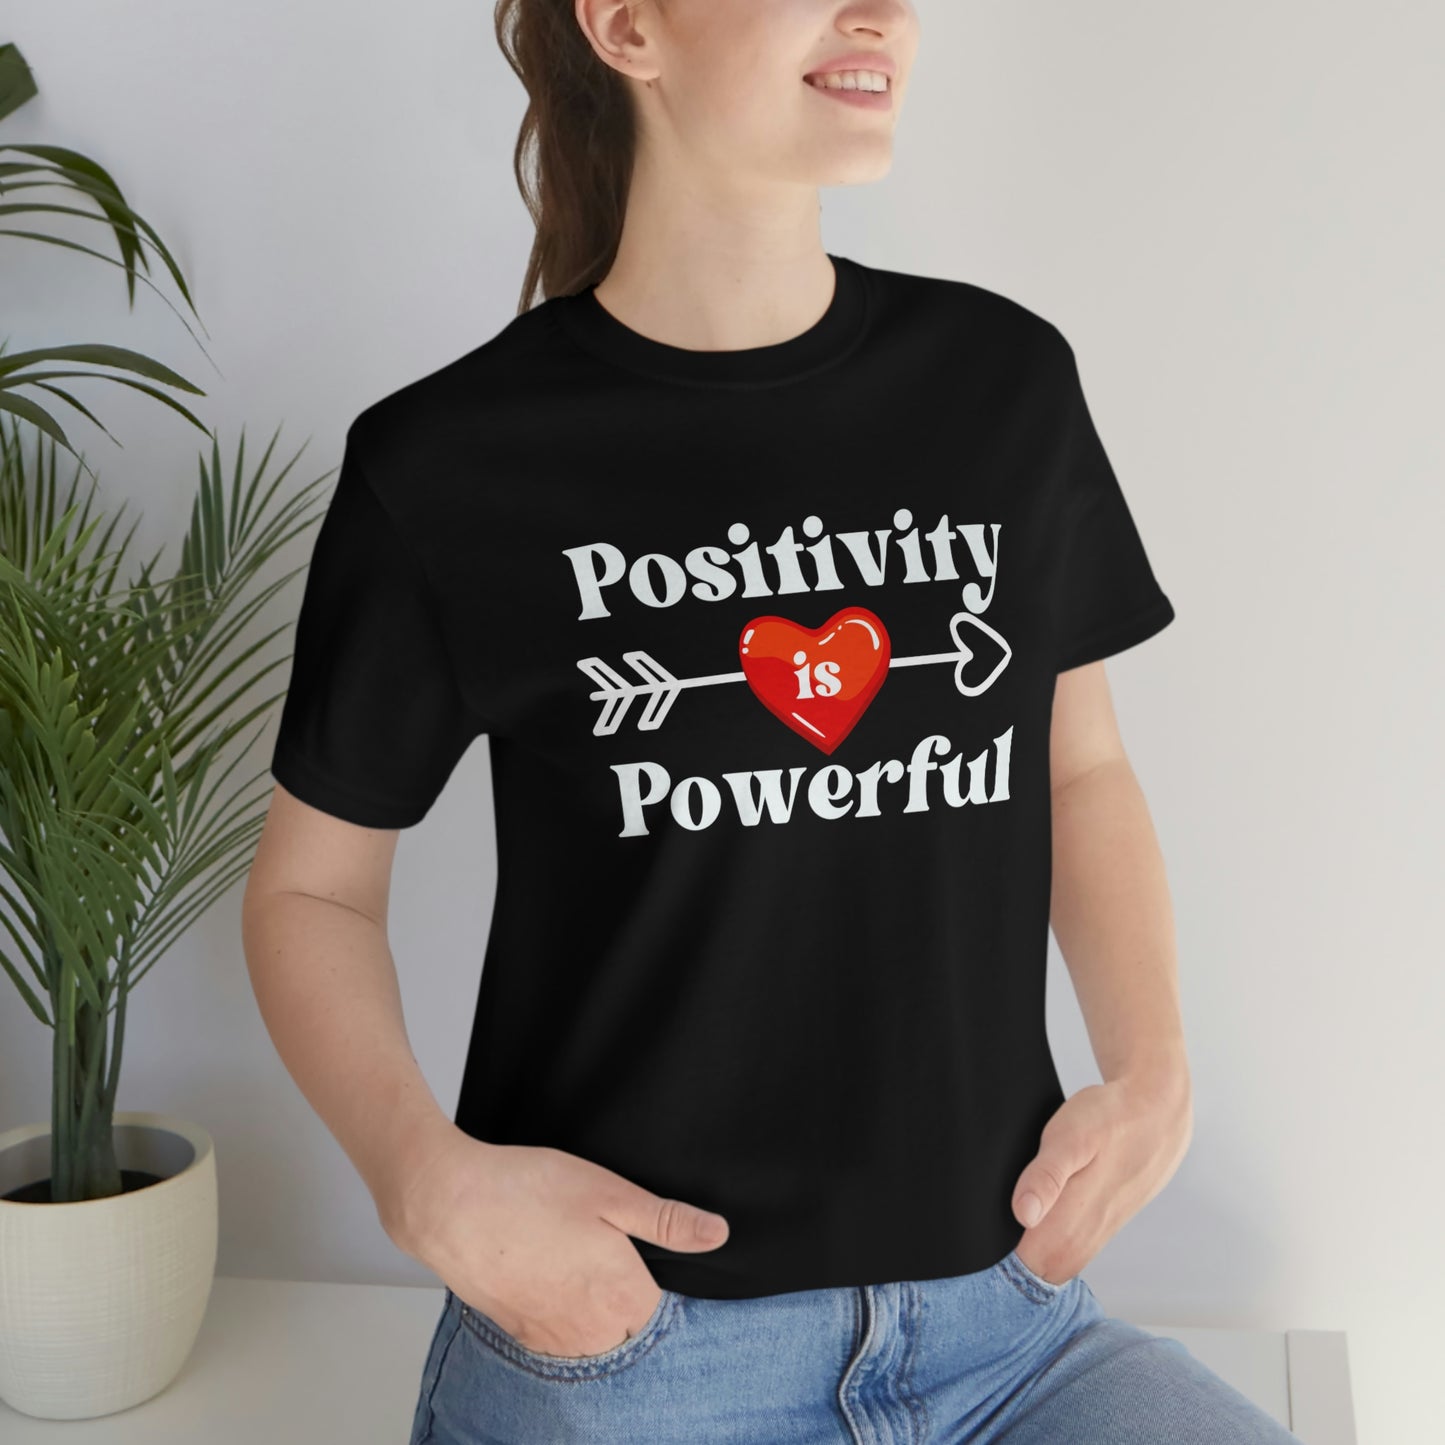 Positivity is Powerful Unisex Adult Jersey Short Sleeve Tee